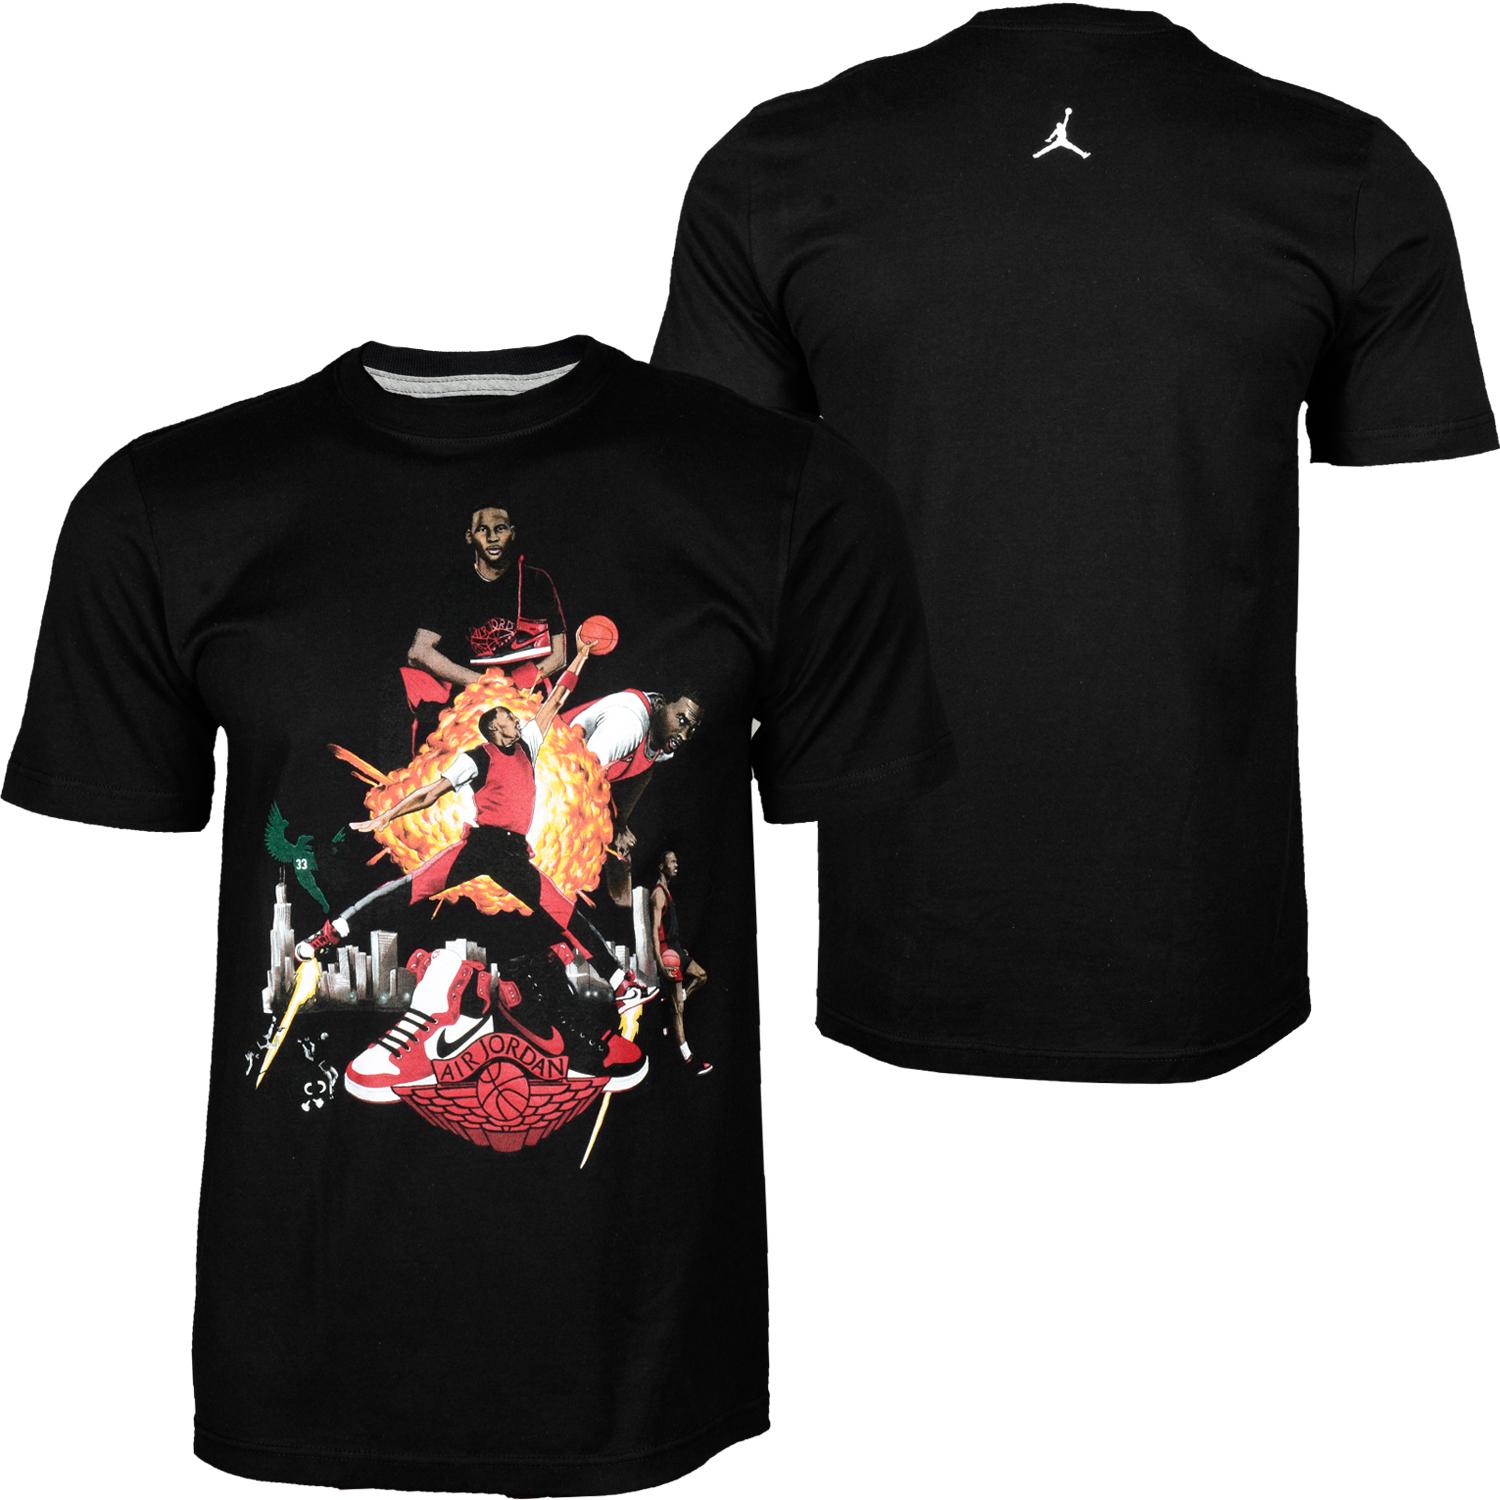 Foto Nike Air Jordan 1 Picturesque T-shirt Negro foto 115285